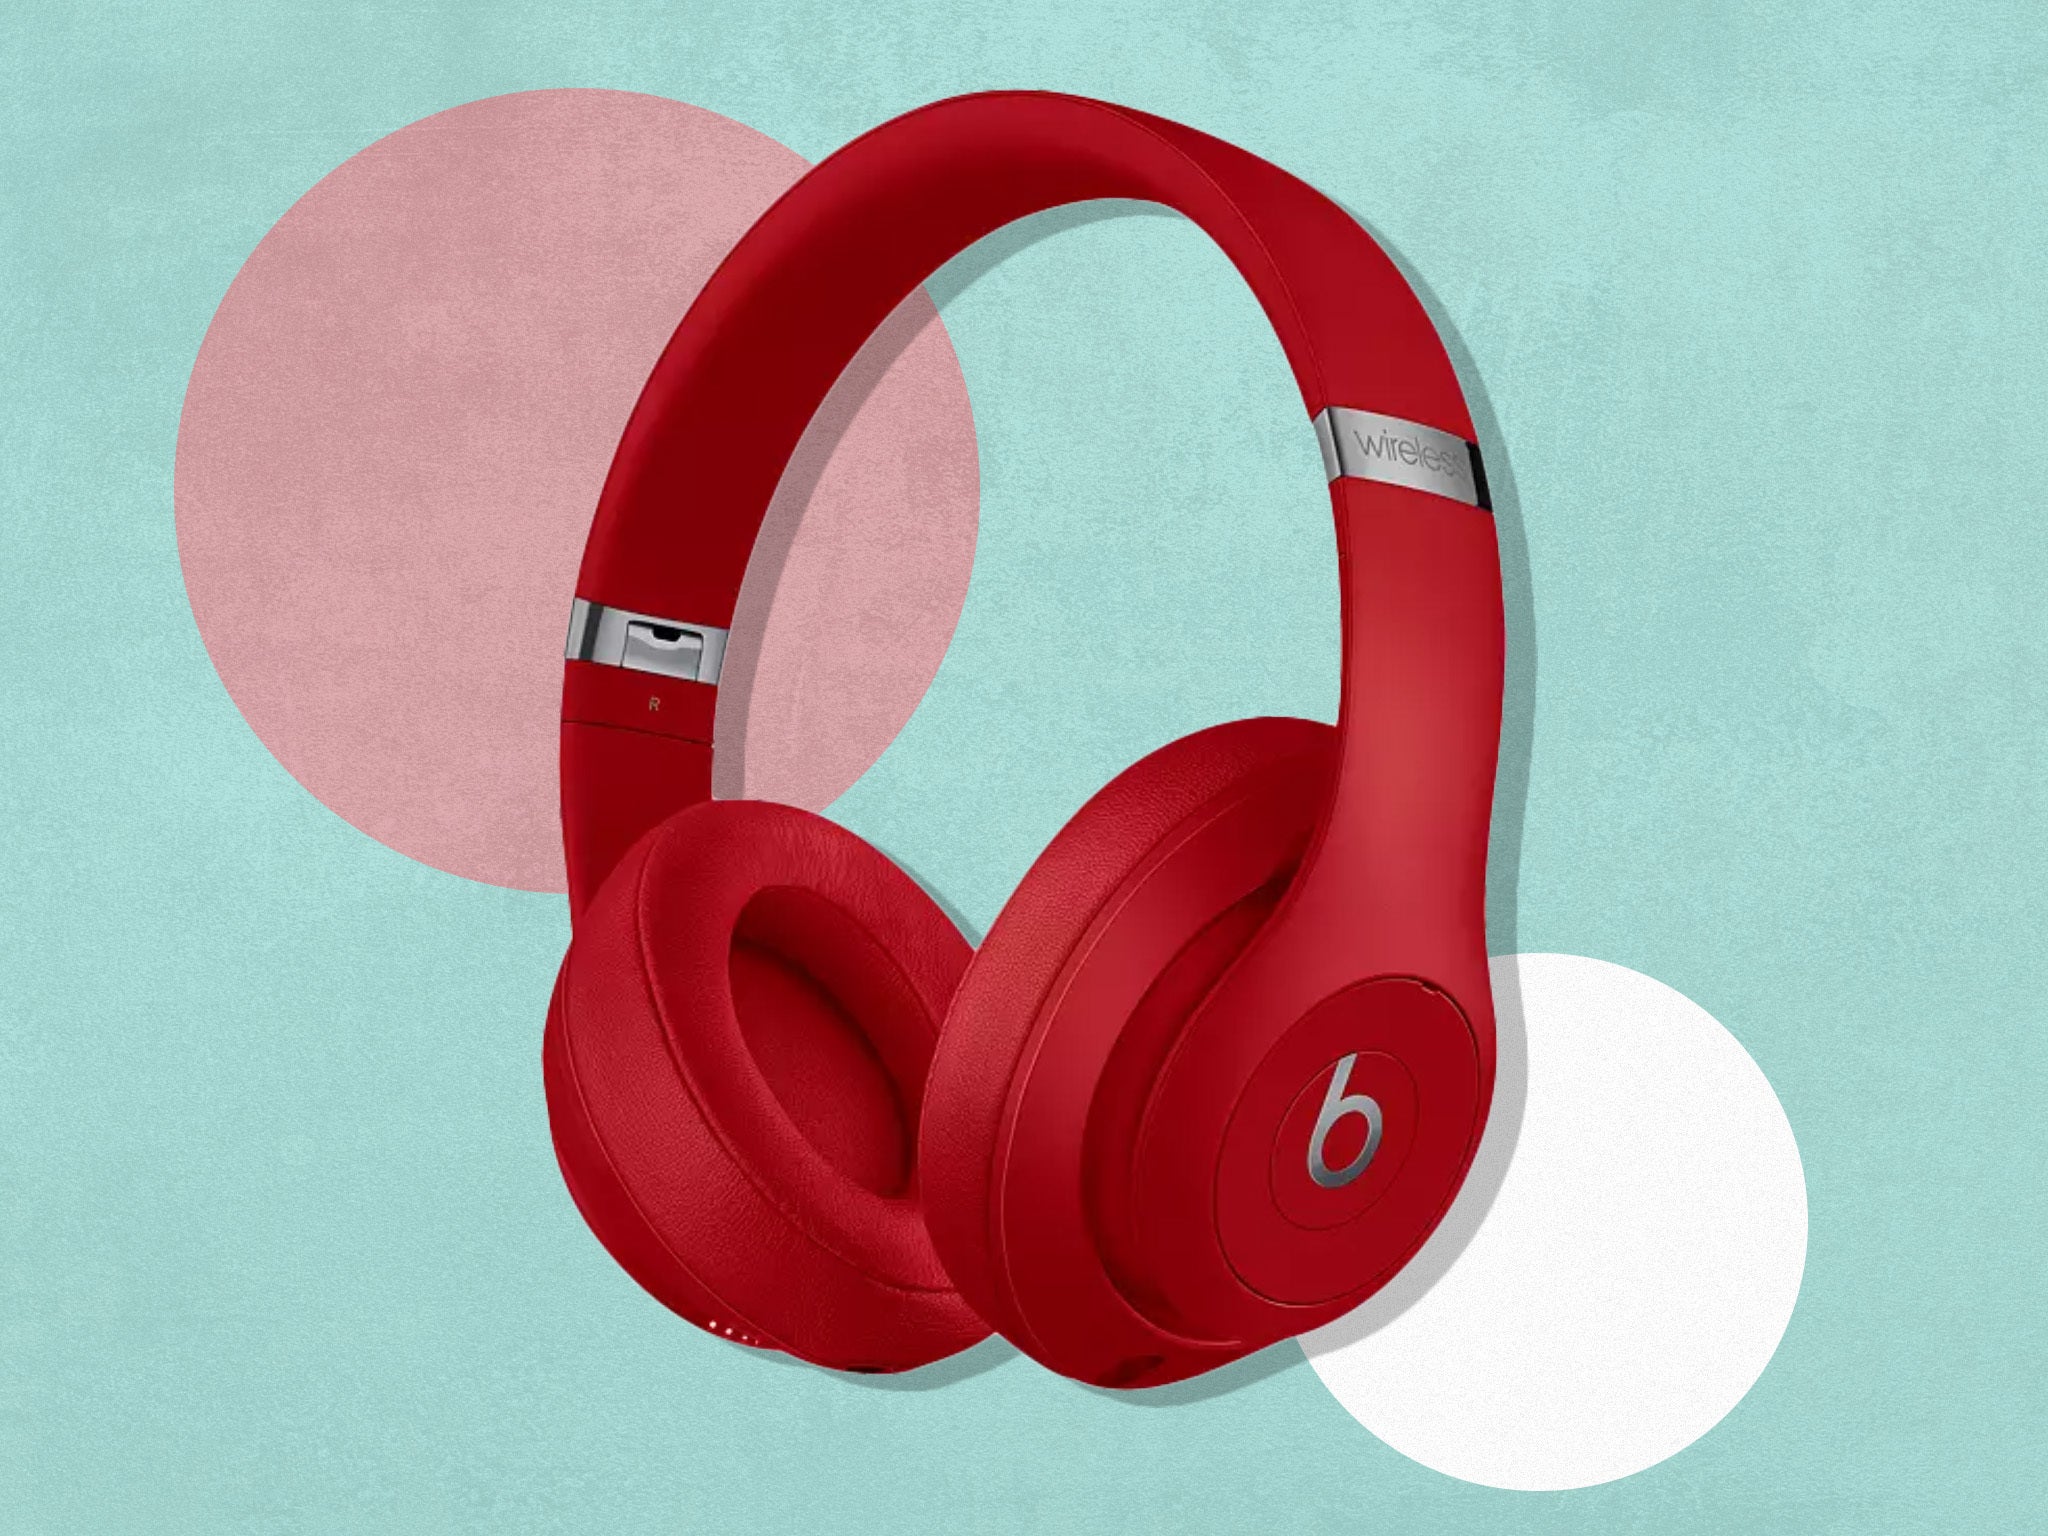 Beats studio3 wireless review: Are the headphones still worth